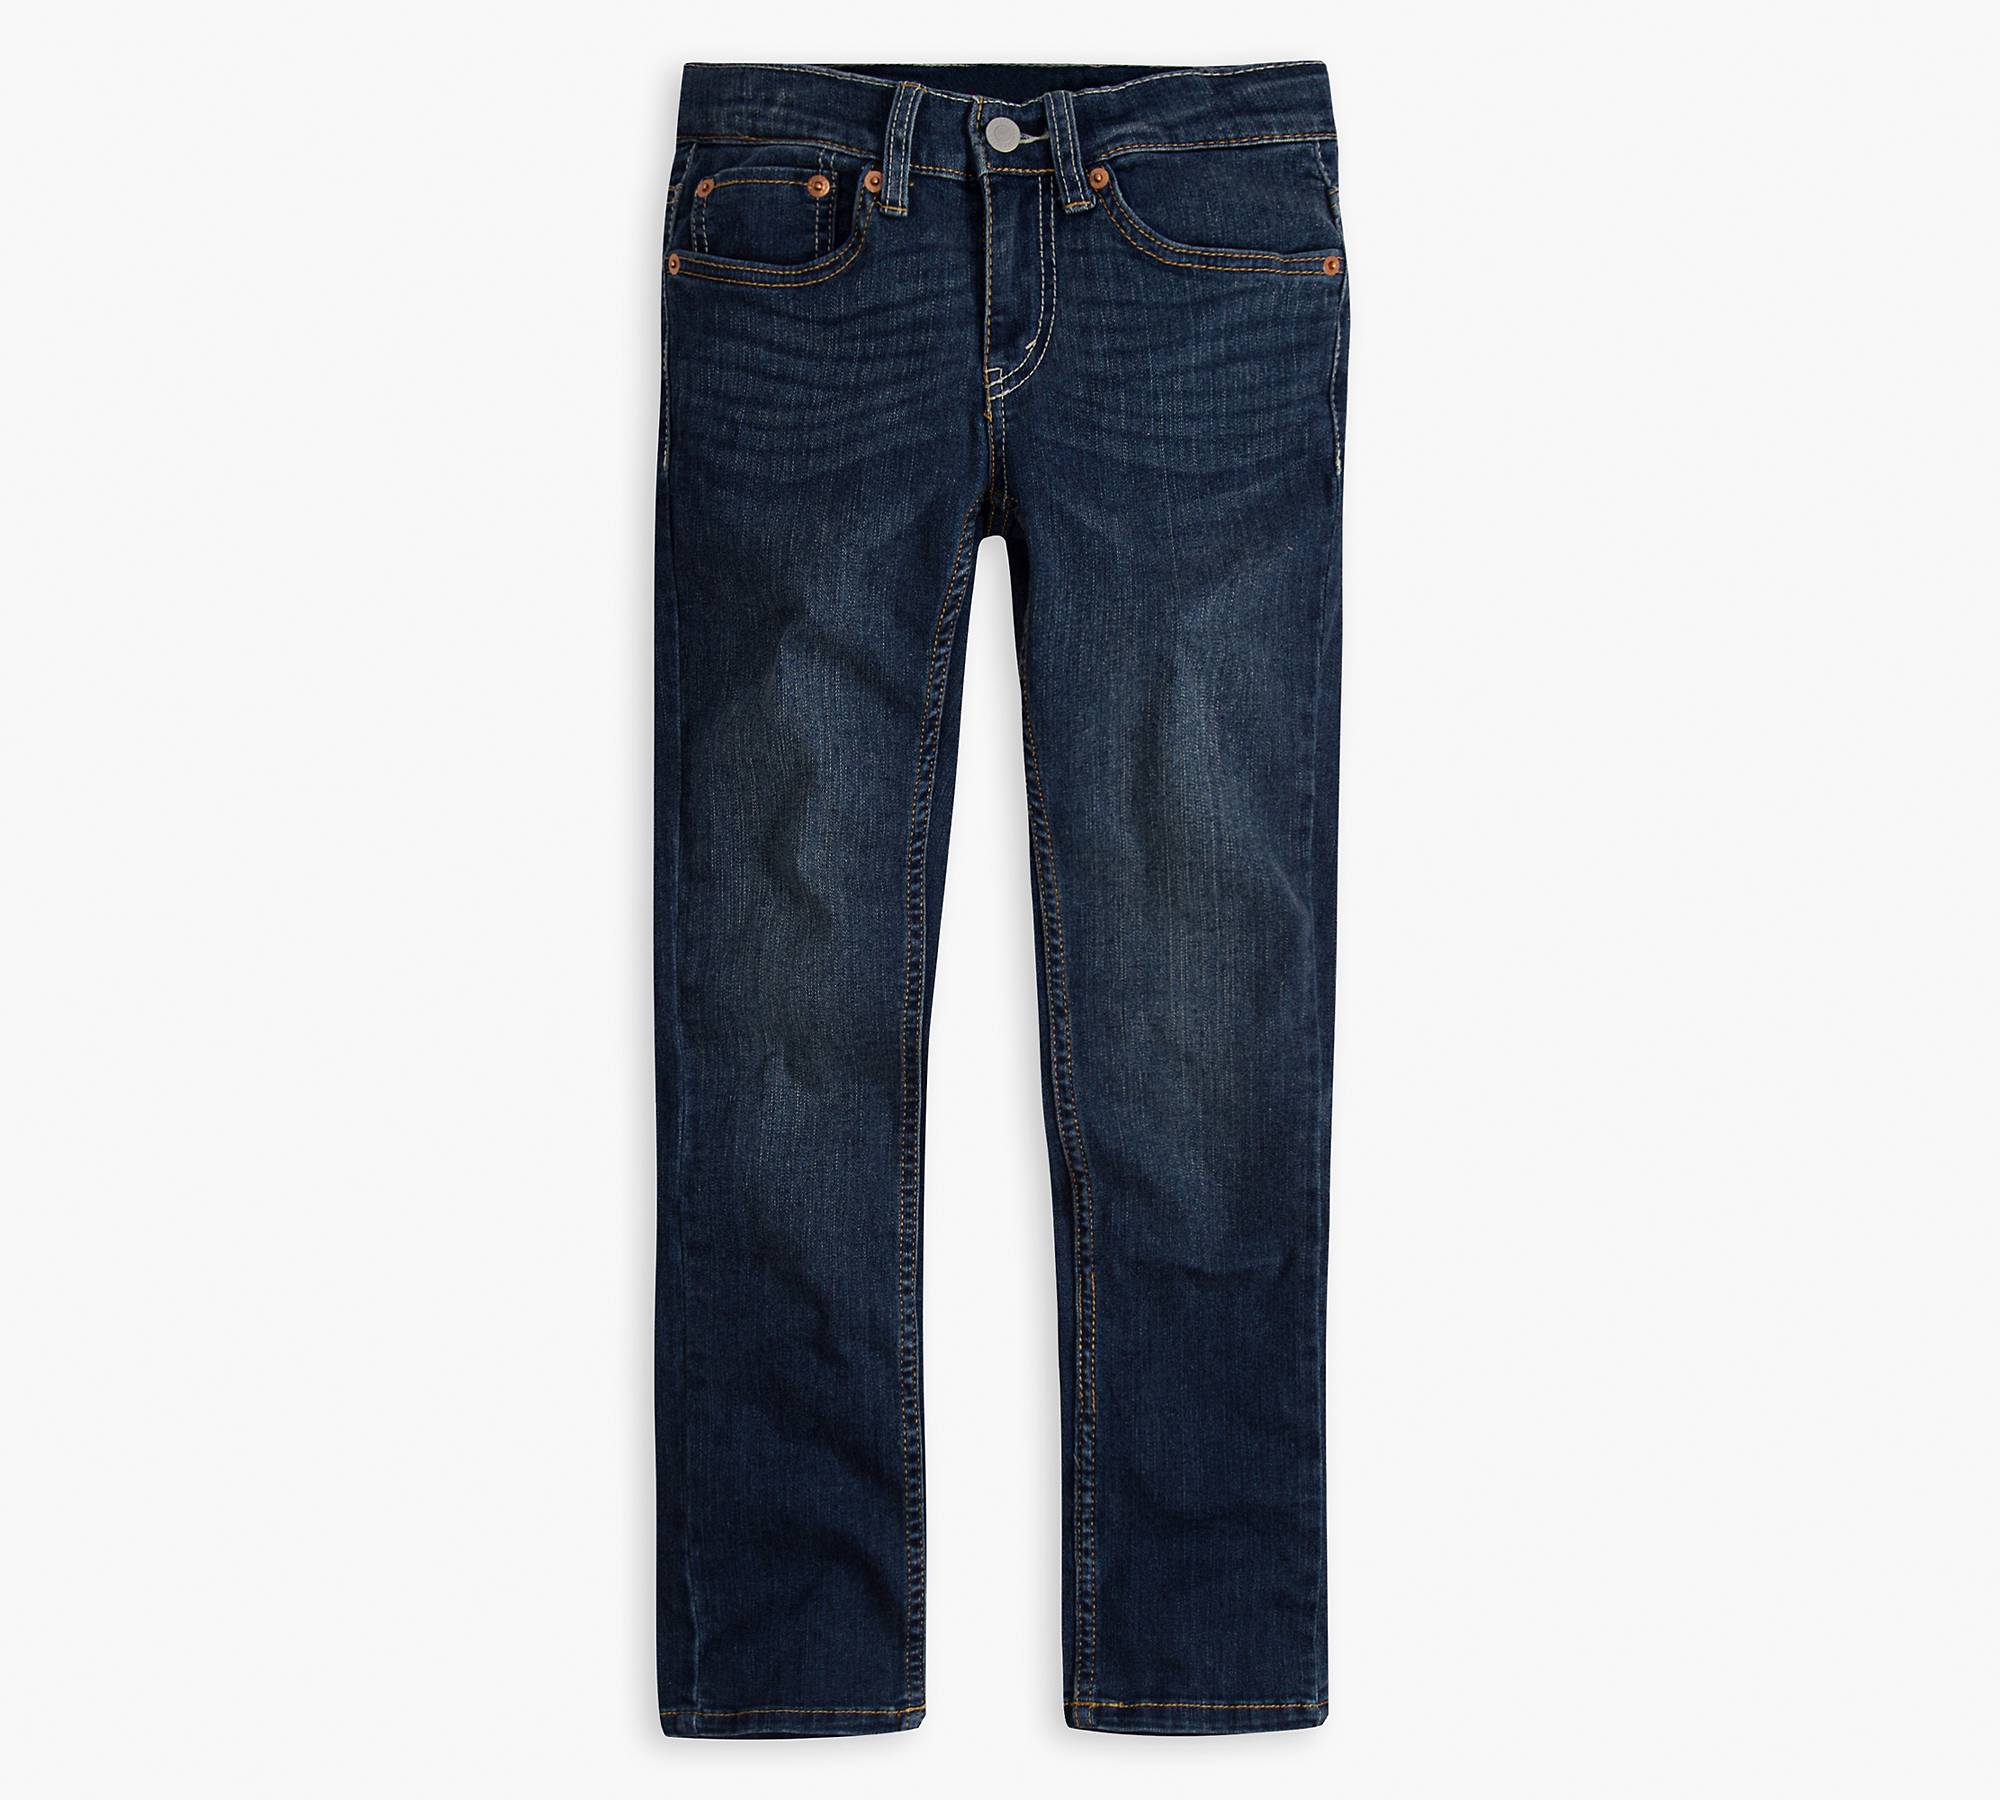 512™ Slim Taper Fit Little Boys Jeans 4-7x 1